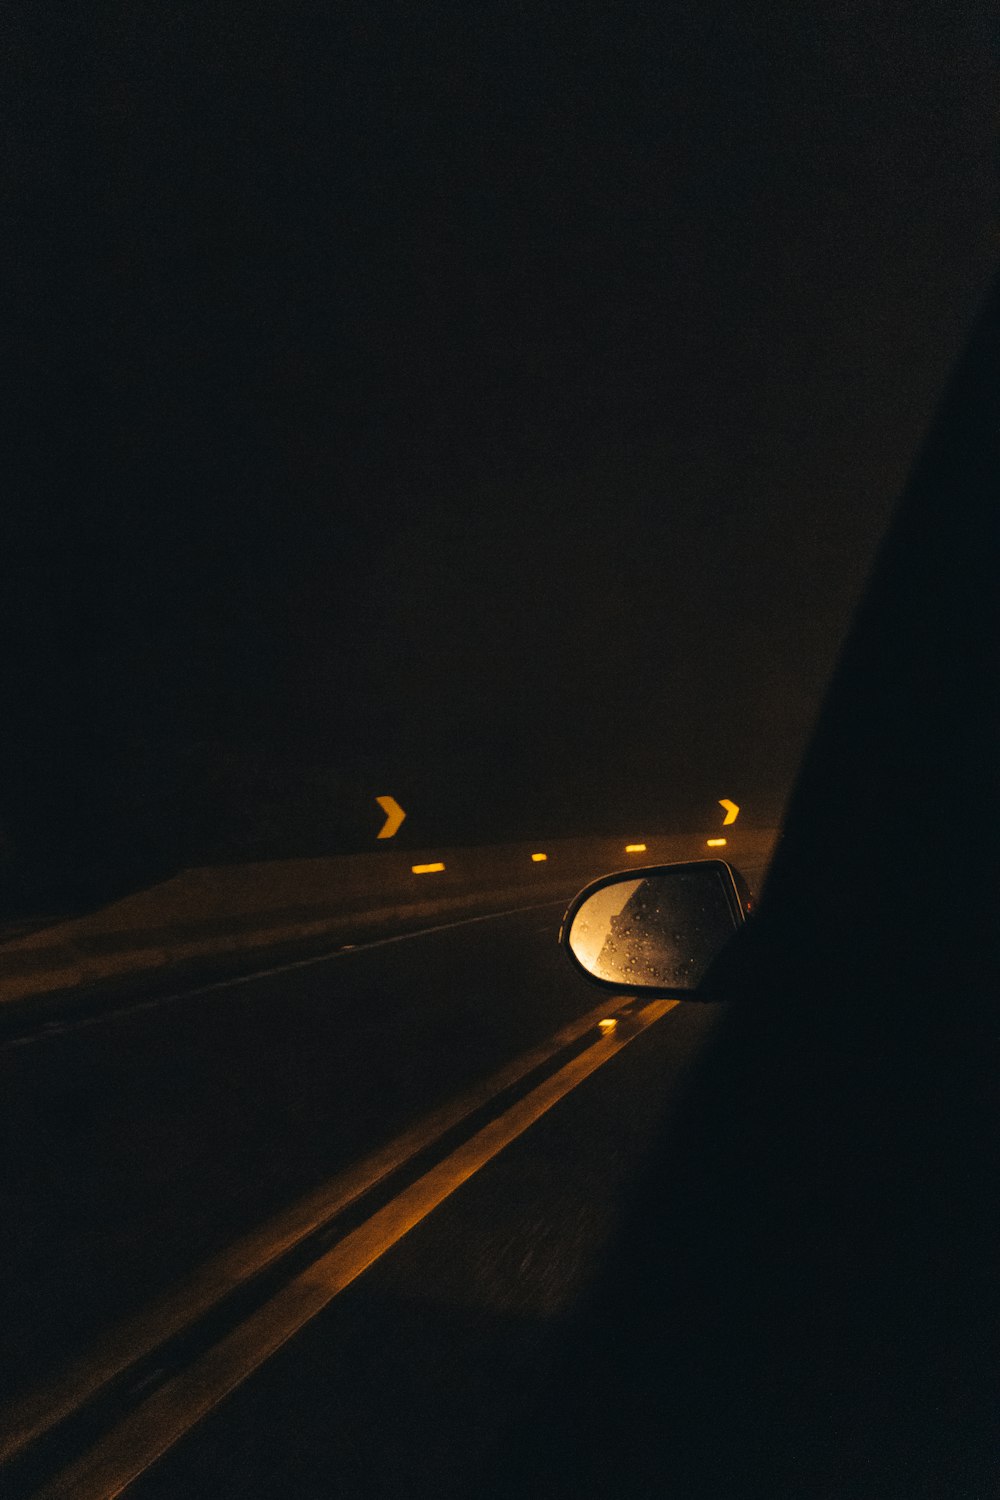 Un coche conduciendo por una autopista de noche